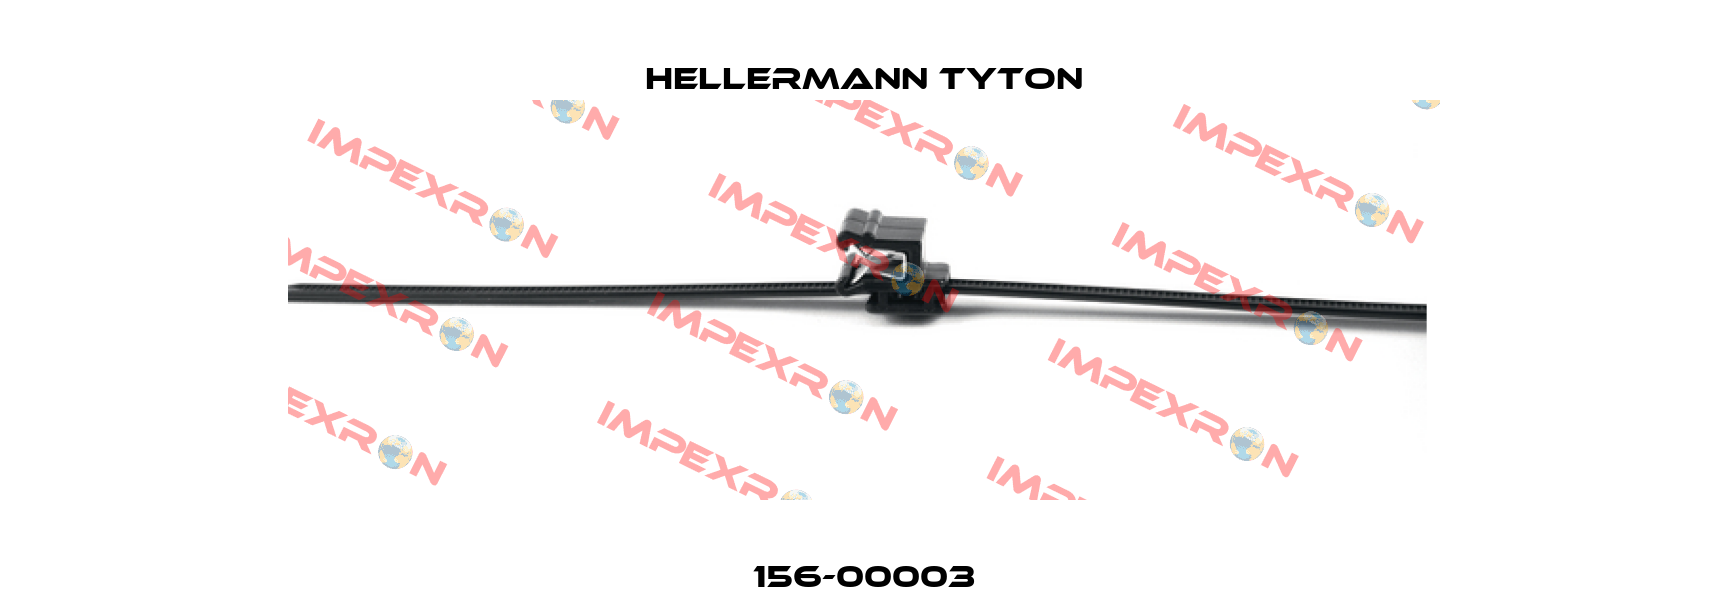 156-00003 Hellermann Tyton